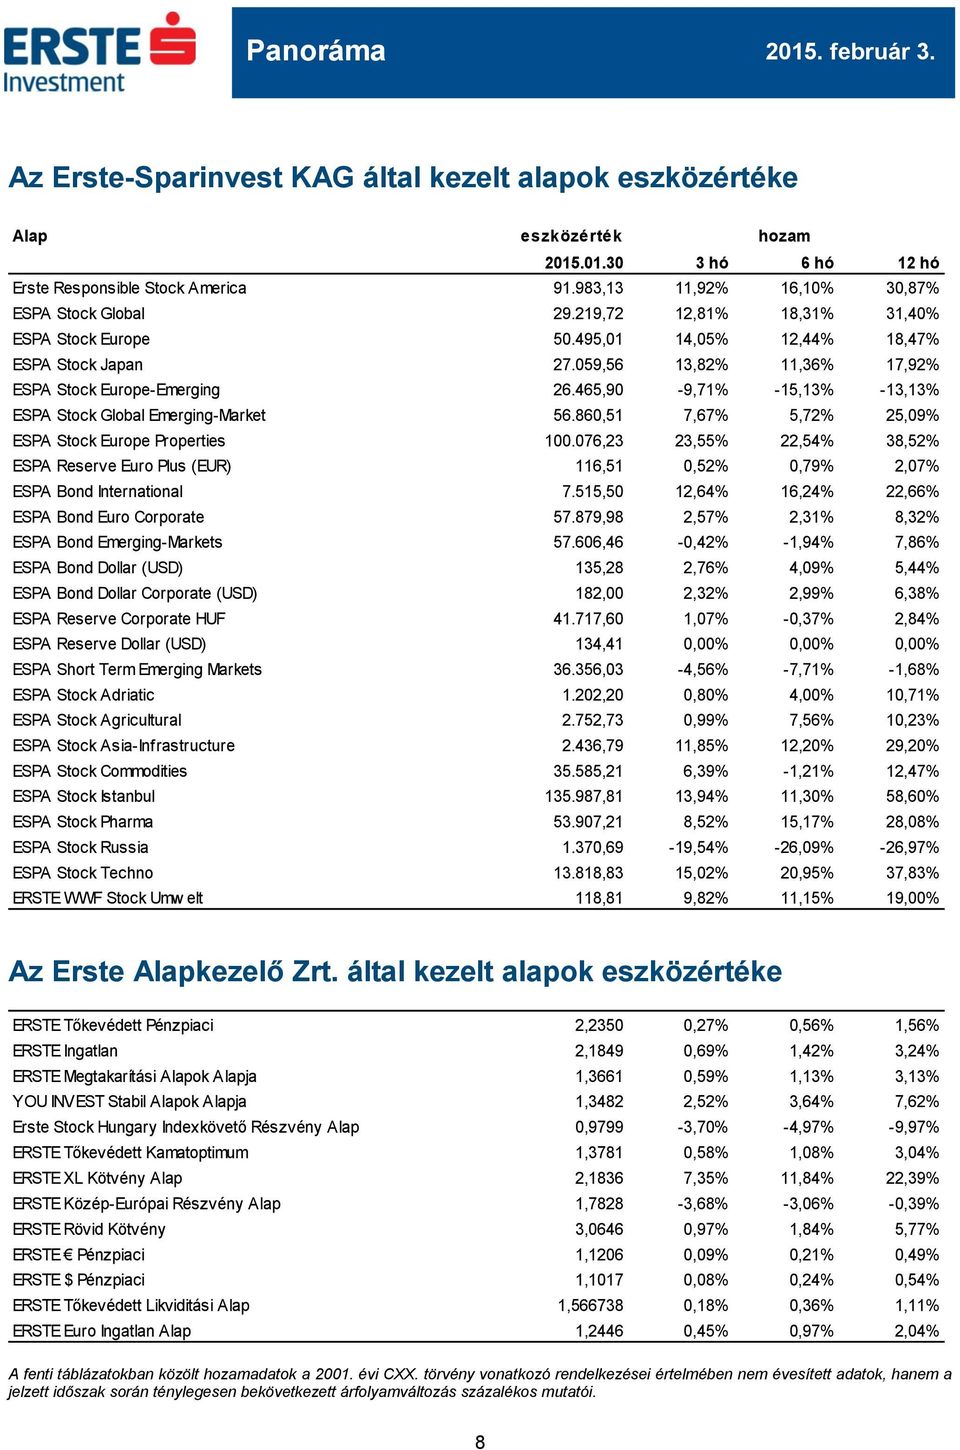 465,90-9,71% -15,13% -13,13% ESPA Stock Global Emerging-Market 56.860,51 7,67% 5,72% 25,09% ESPA Stock Europe Properties 100.